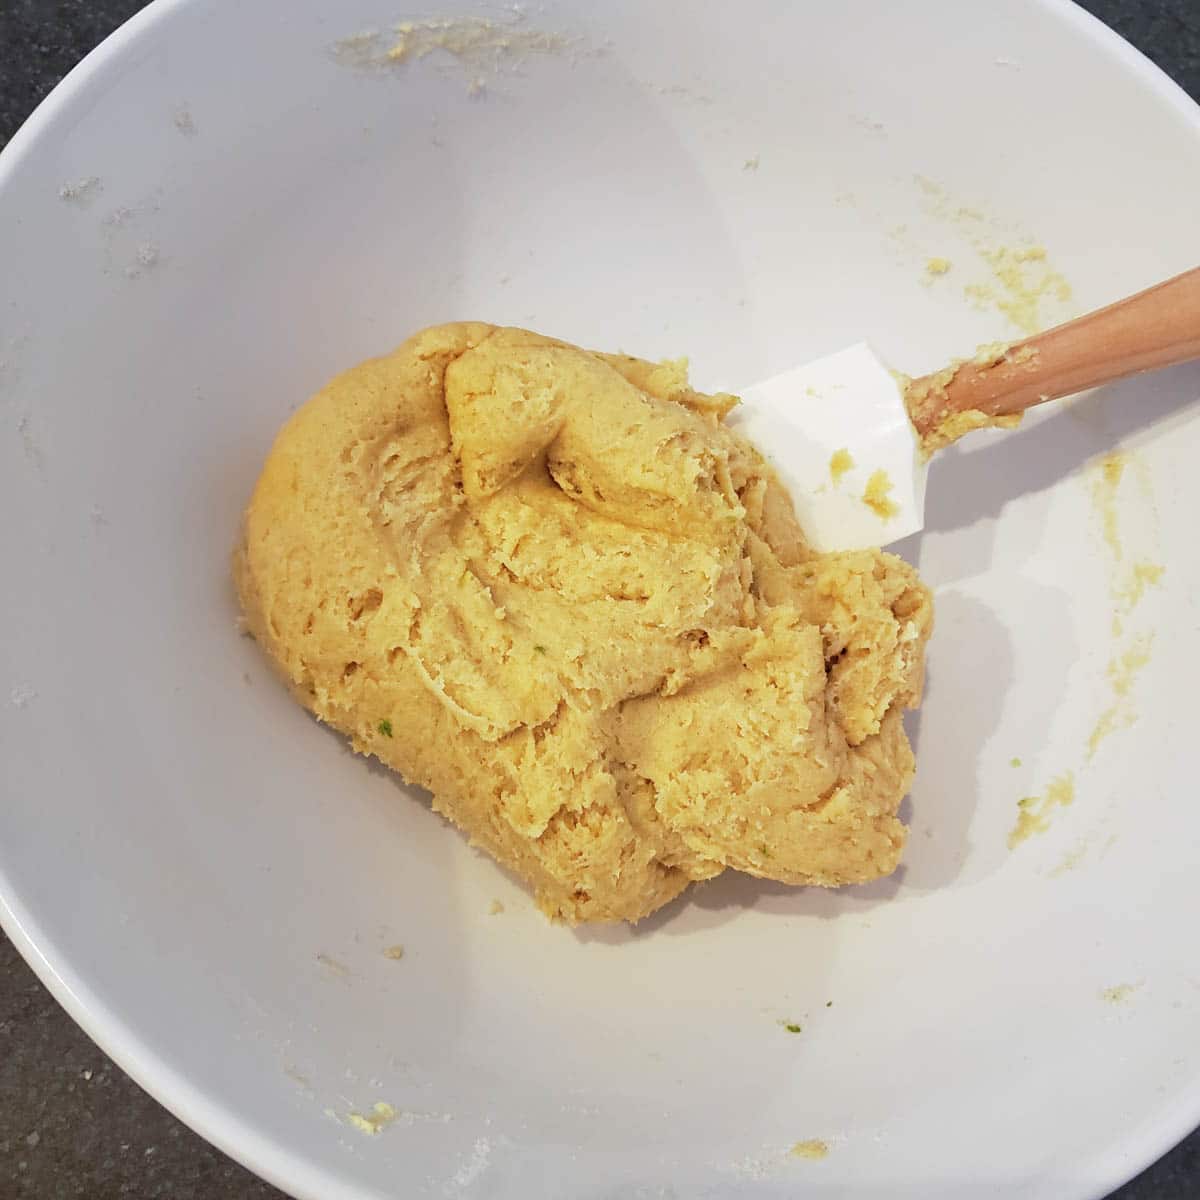 Scone dough in a white bowl with a rubber spatula.